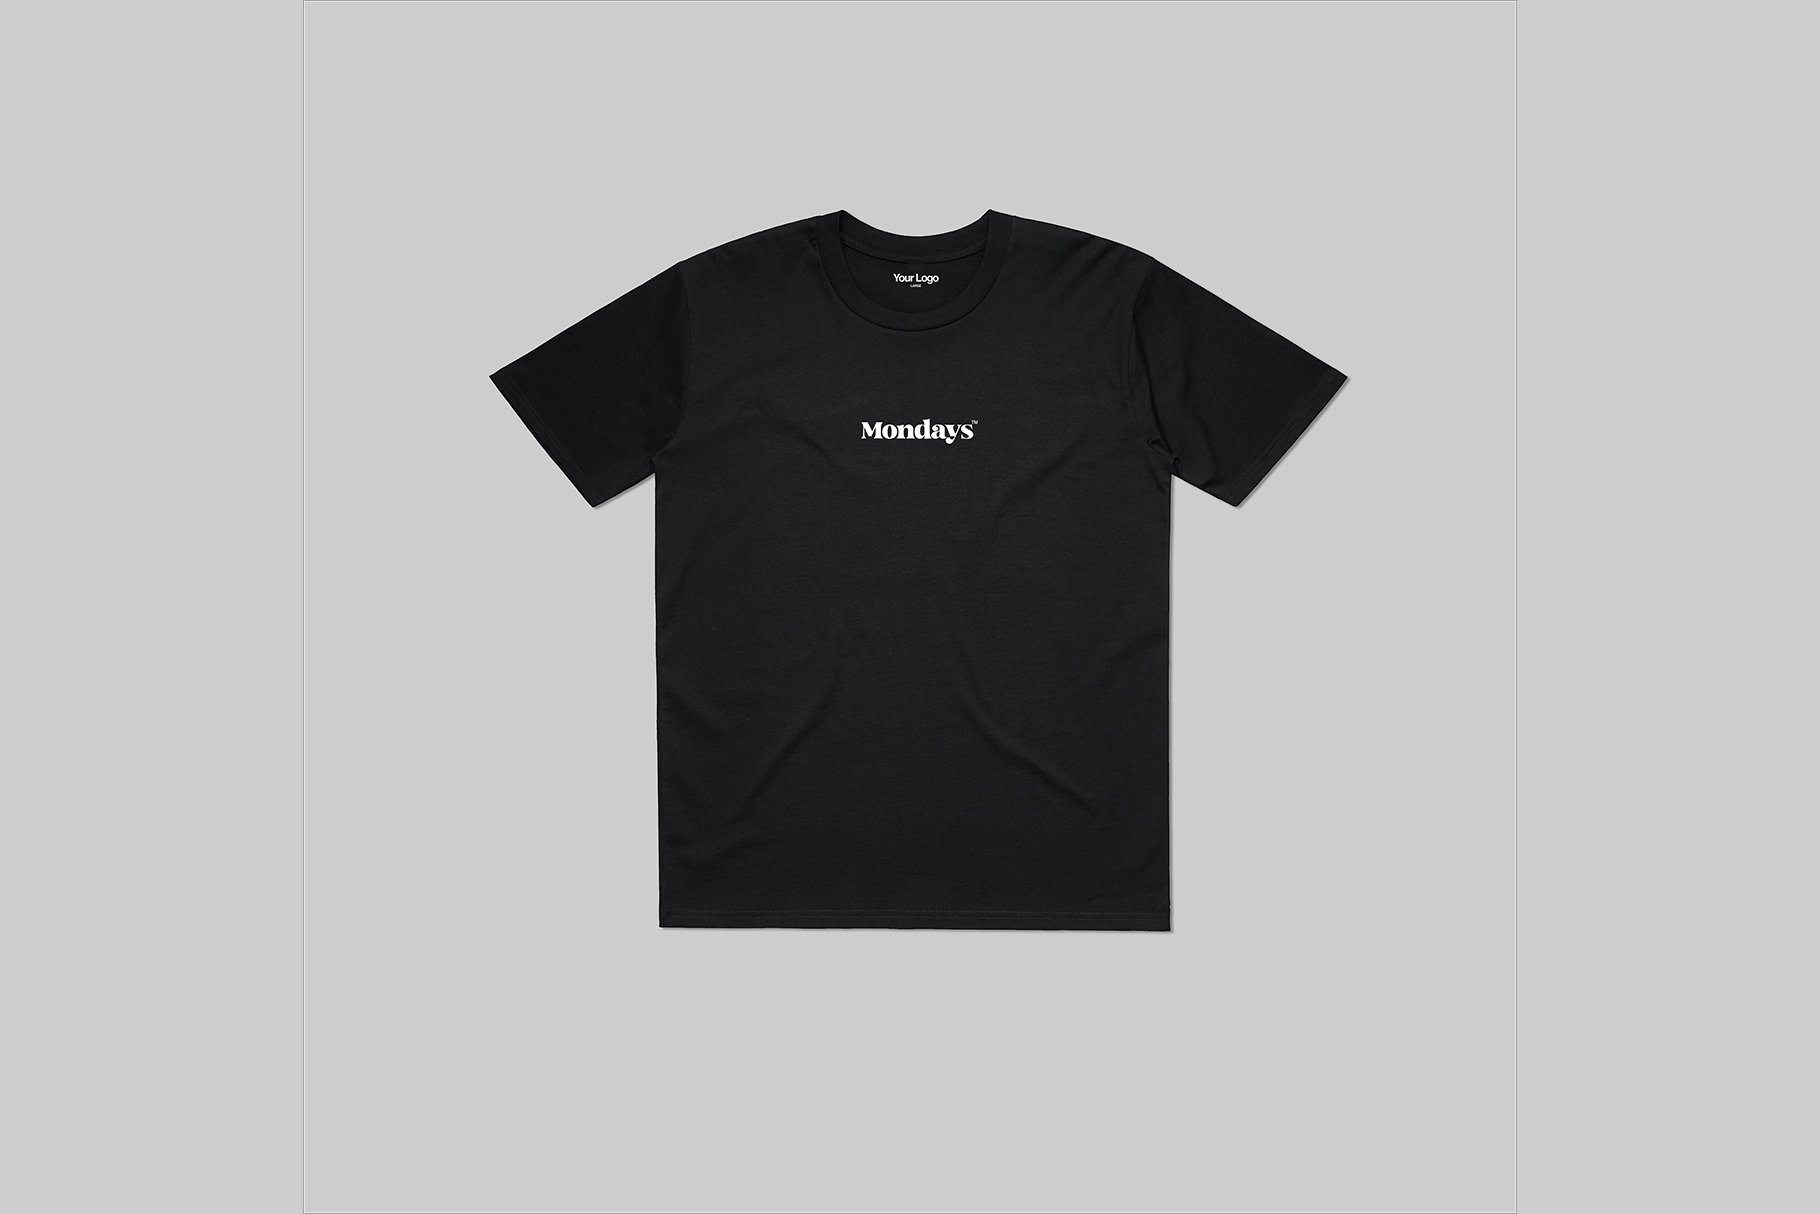 Streetwear T-shirt Mockup – MasterBundles